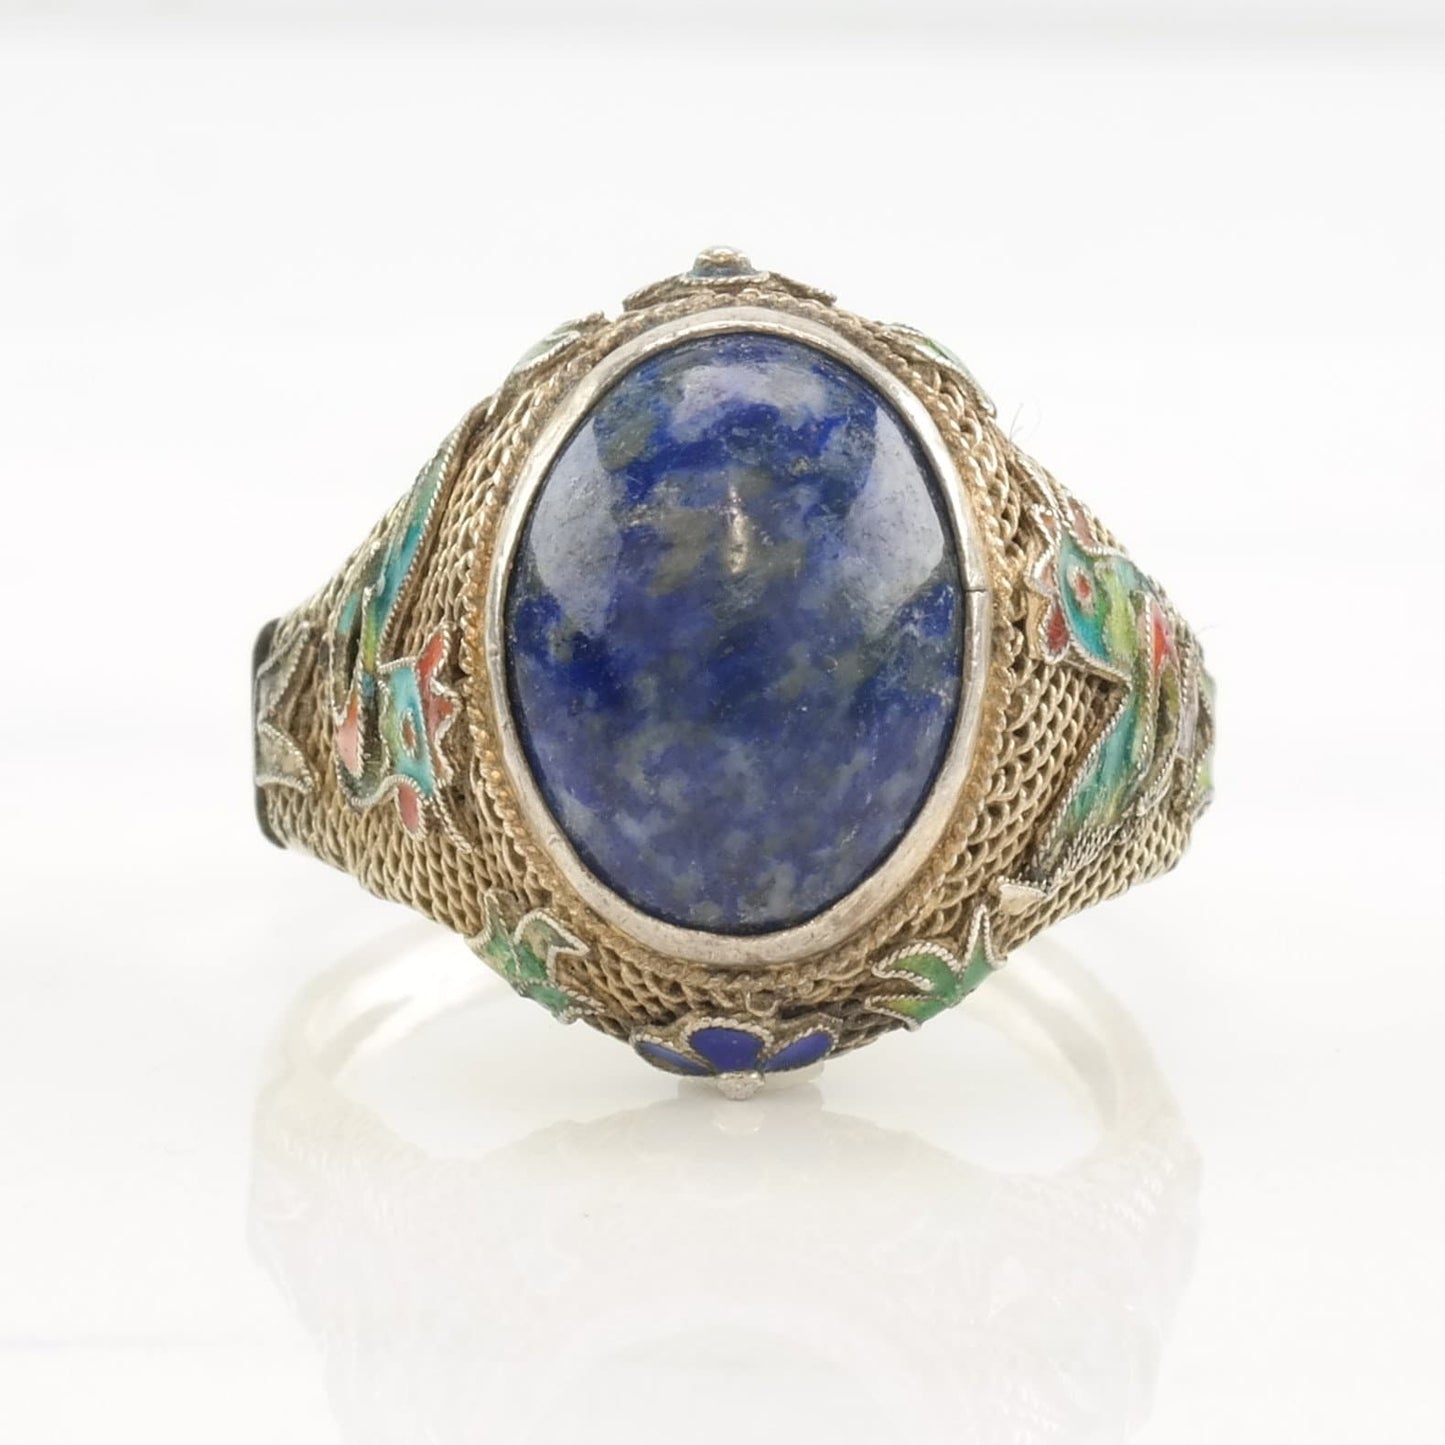 Antique Chinese Ring Lapis Lazuli Enamel, Chicken, Filigree Sterling Silver Size 9 - 9 1/2